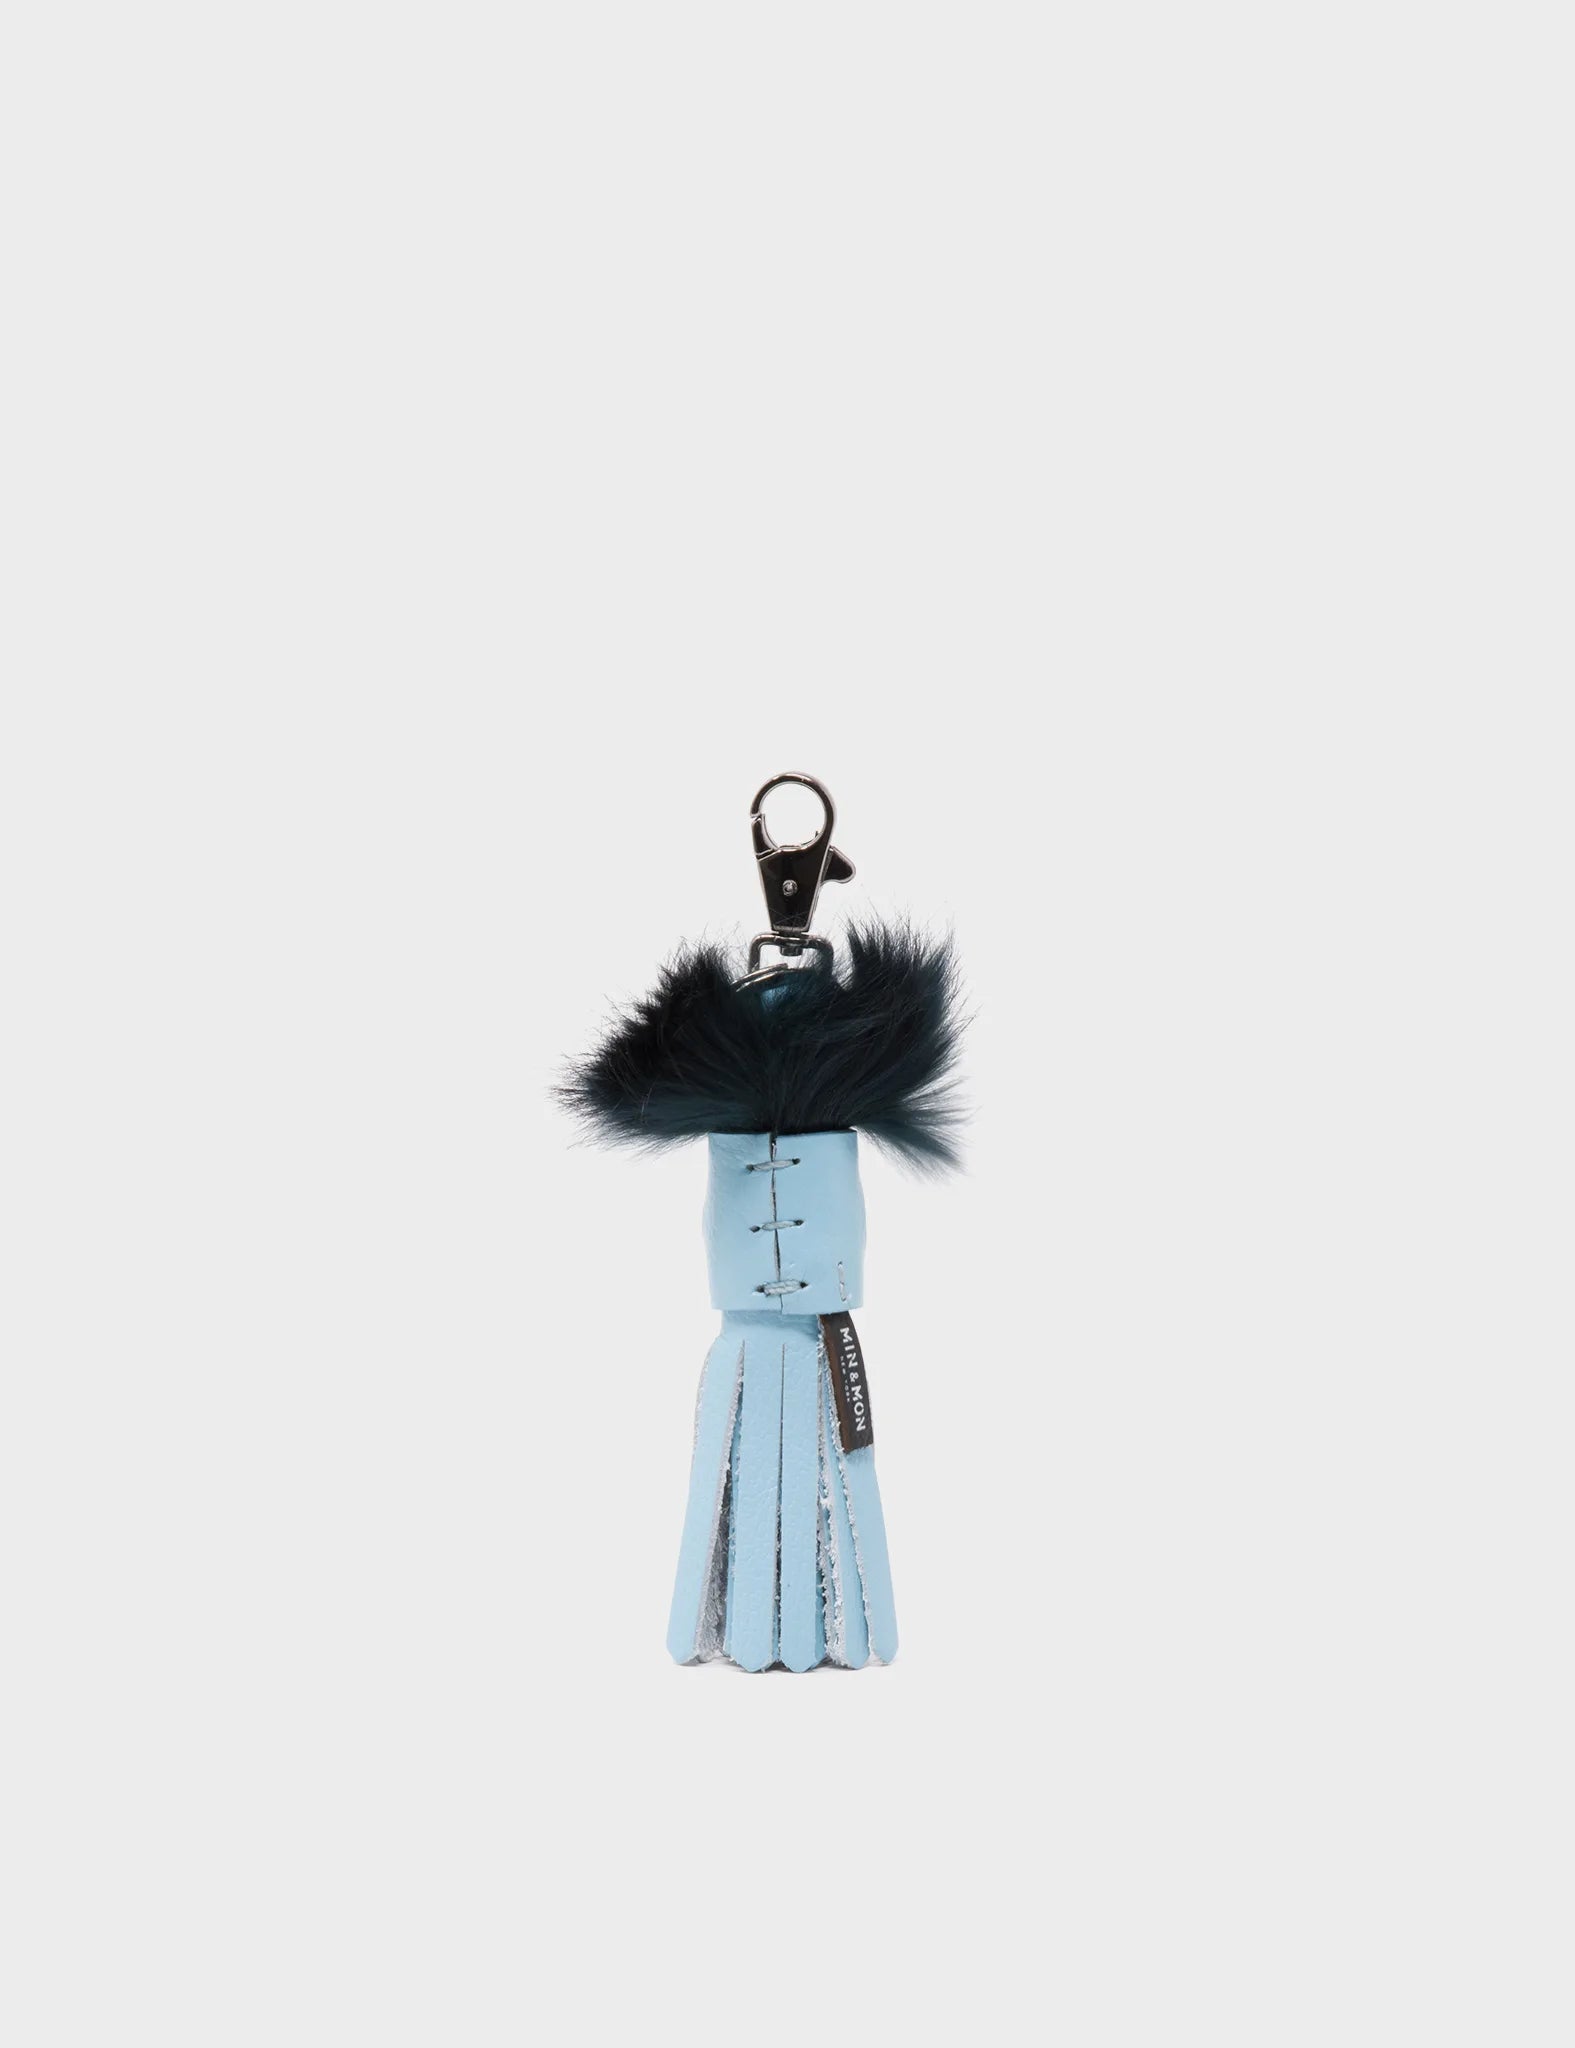 Callie Marie Mayne - Stratosphere Blue and Black Fur Keychain - Back